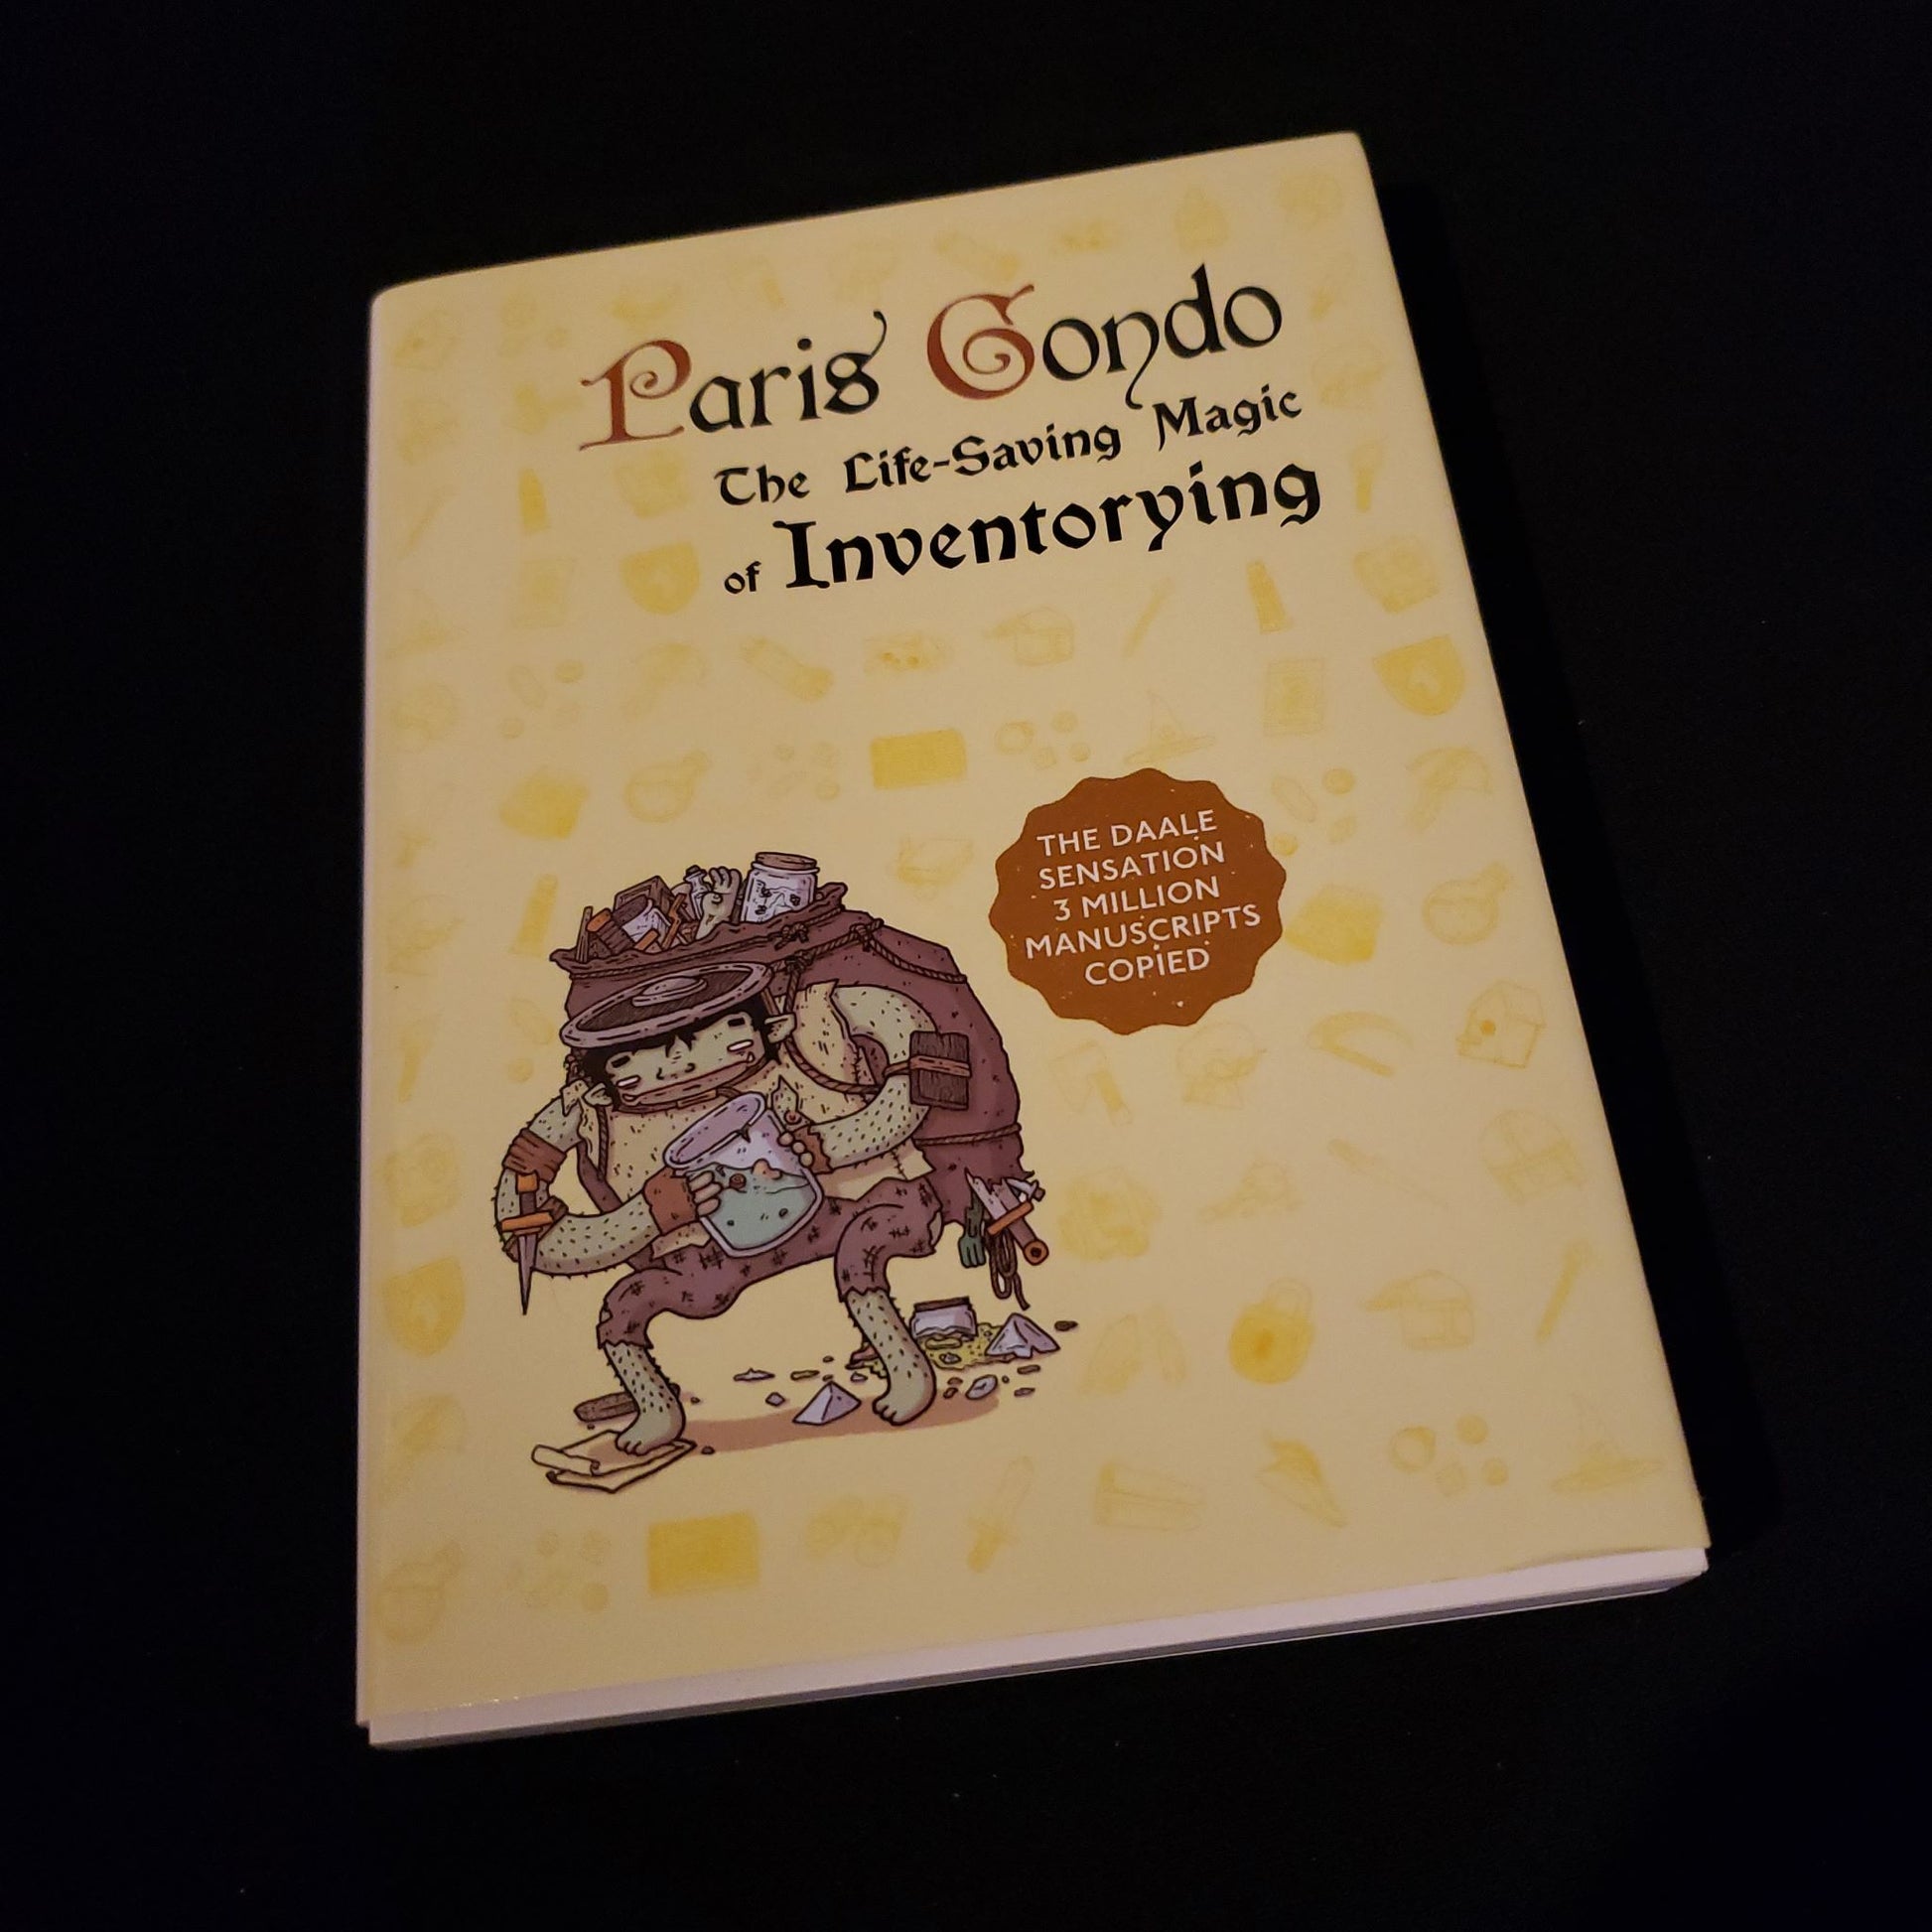 Paris Gondo RPG book - front cover of book